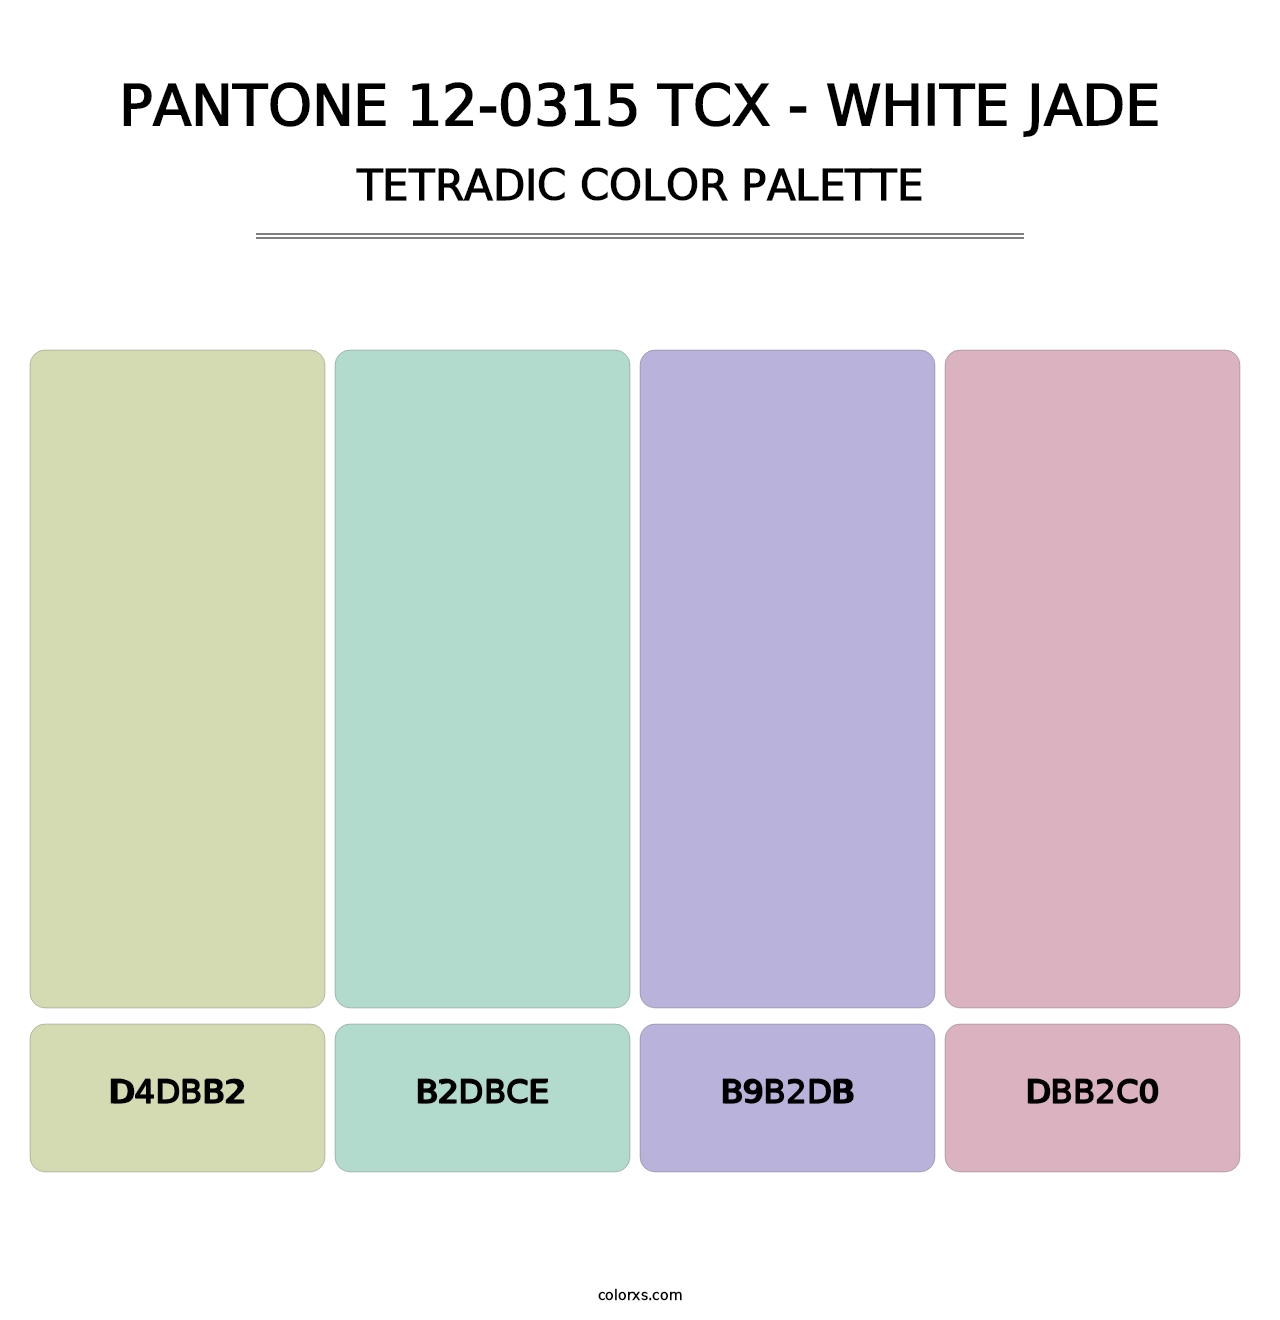 PANTONE 12-0315 TCX - White Jade - Tetradic Color Palette